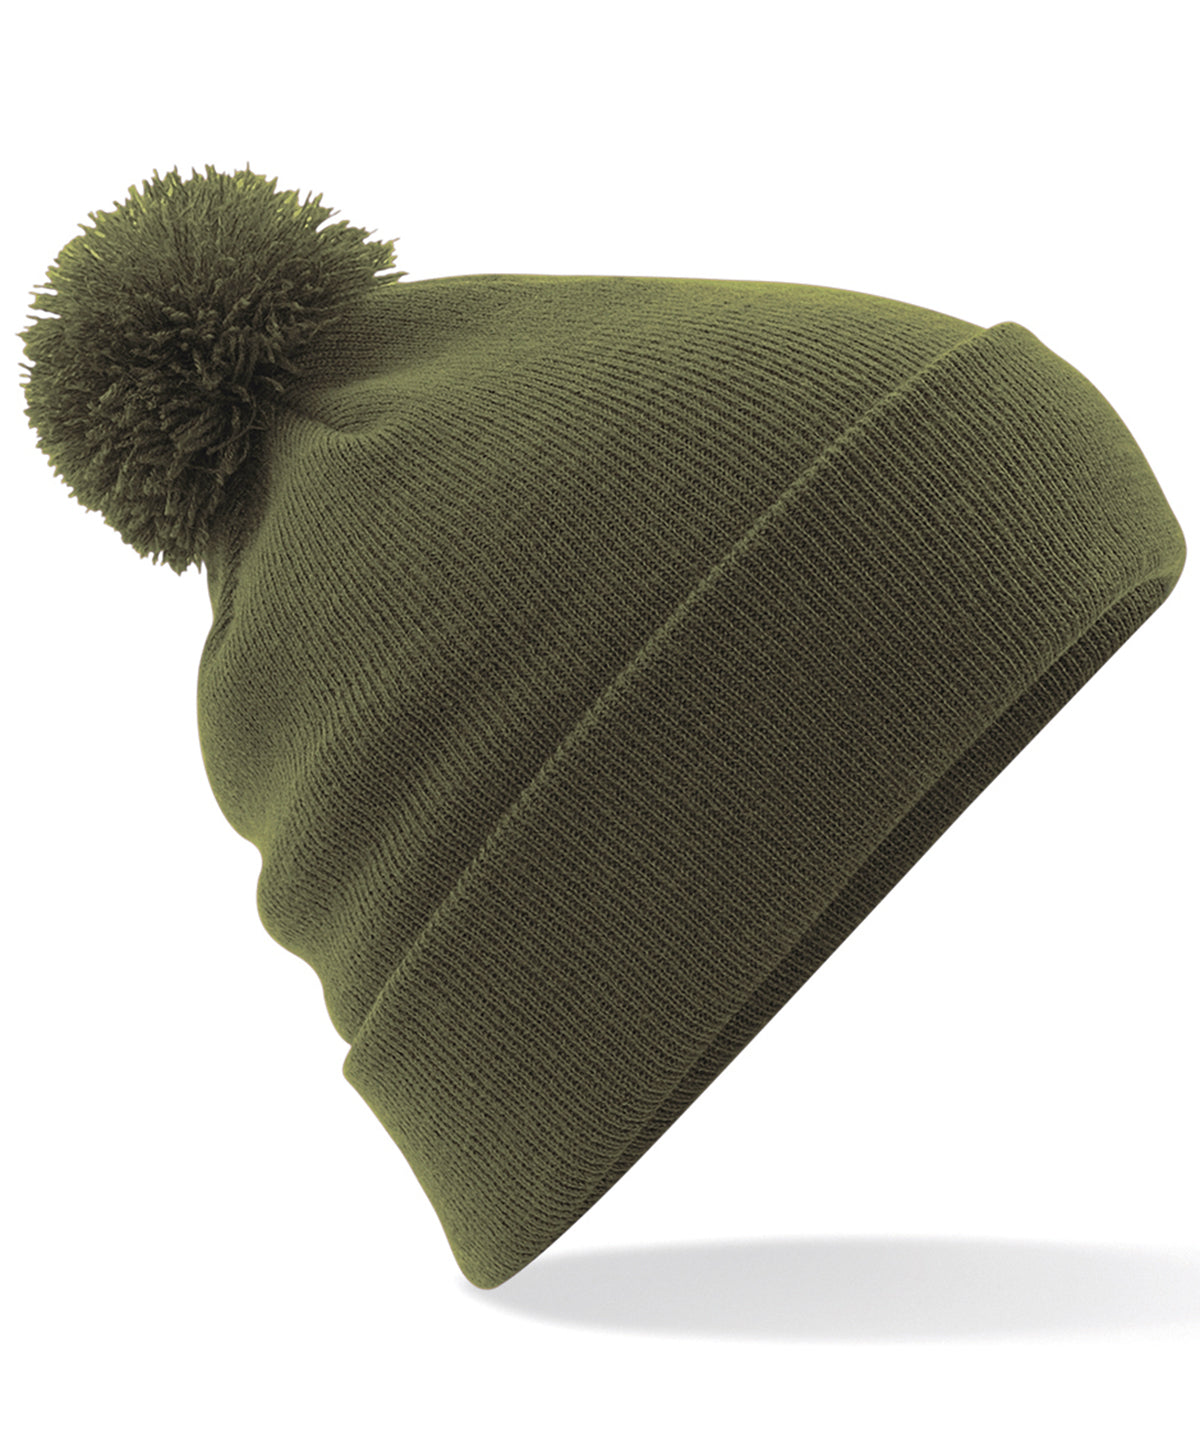 Personalised Hats - Olive Beechfield Original pom pom beanie